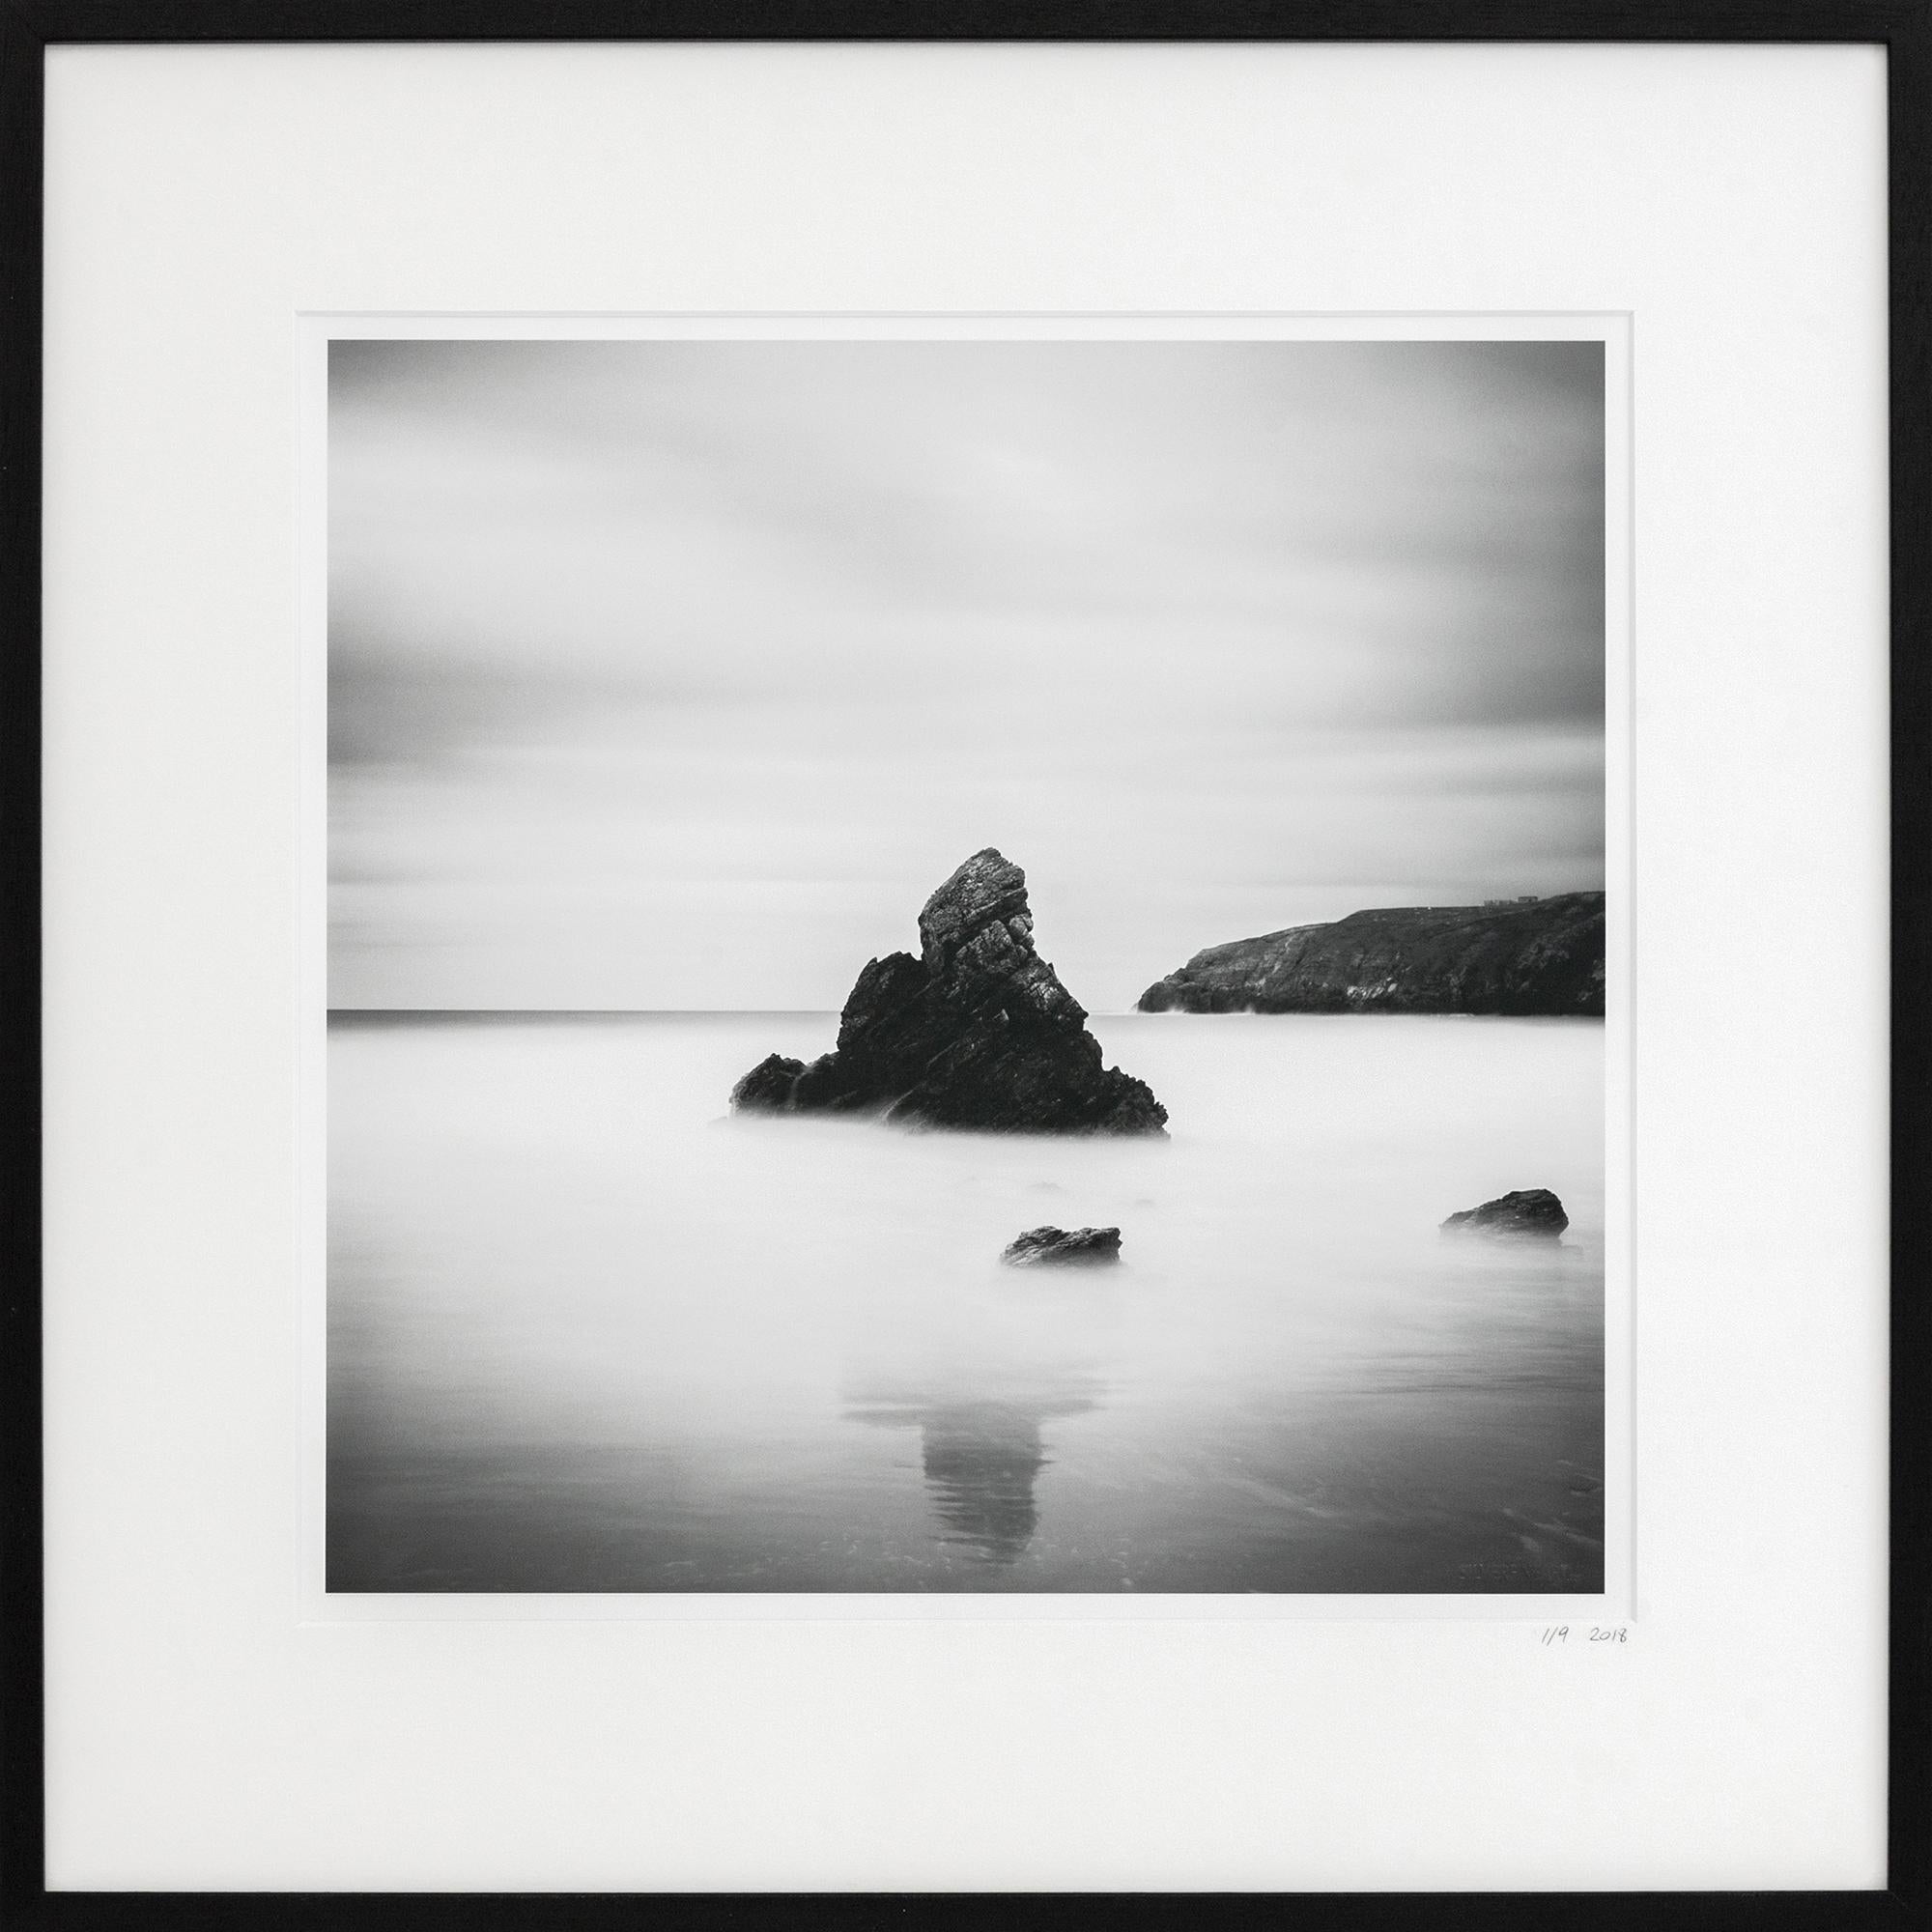 Gerald Berghammer Landscape Photograph – Stack am Meer, schottische Felsenküste, Schwarz-Weiß- analoge Fotografie, Holzrahmen